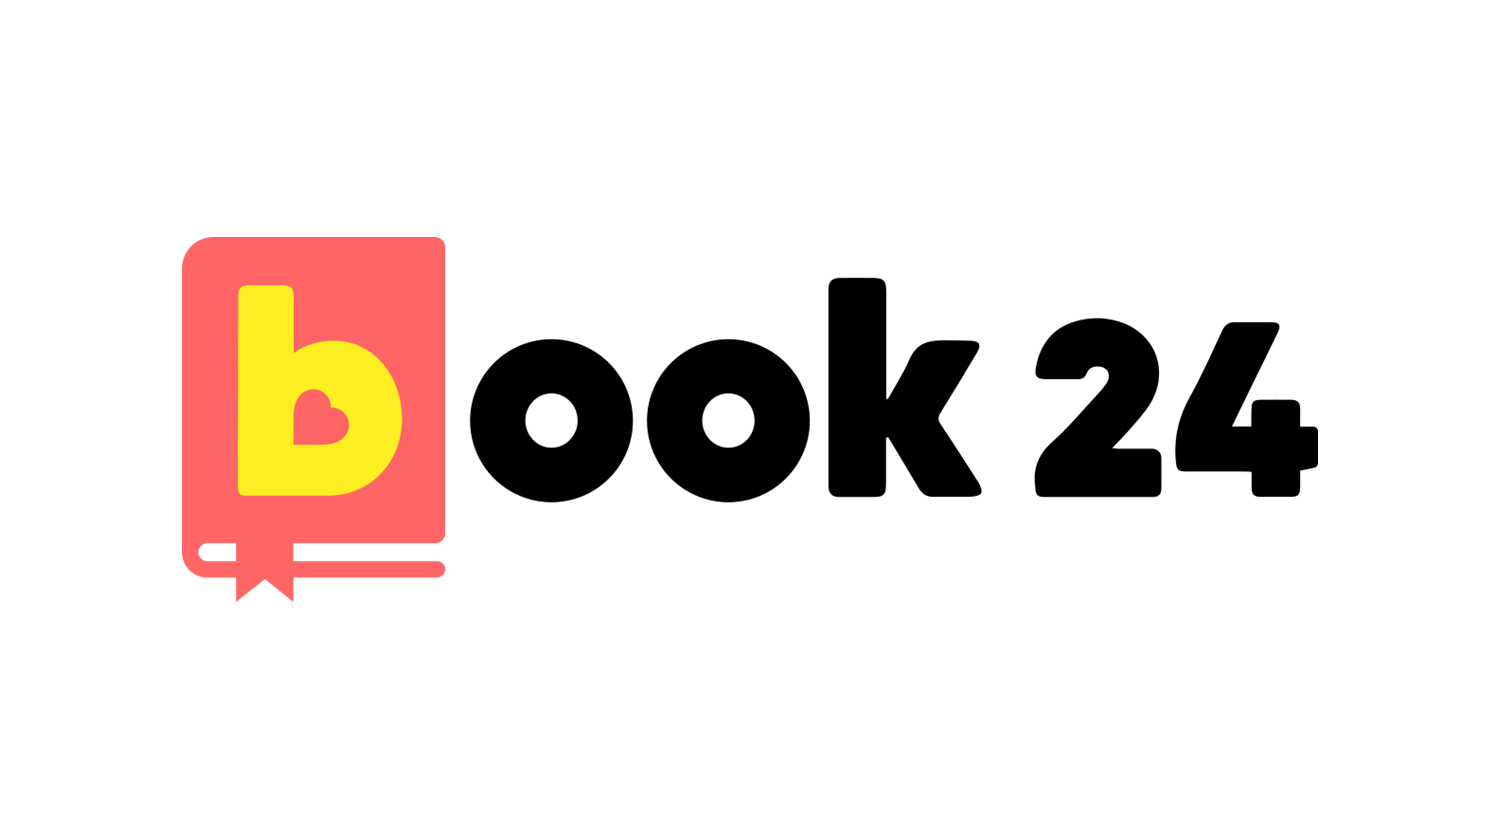 Https rs24 ru product. Book24 логотип. Book24 интернет-магазин. Магазин book 24. Логотип книжного магазина.